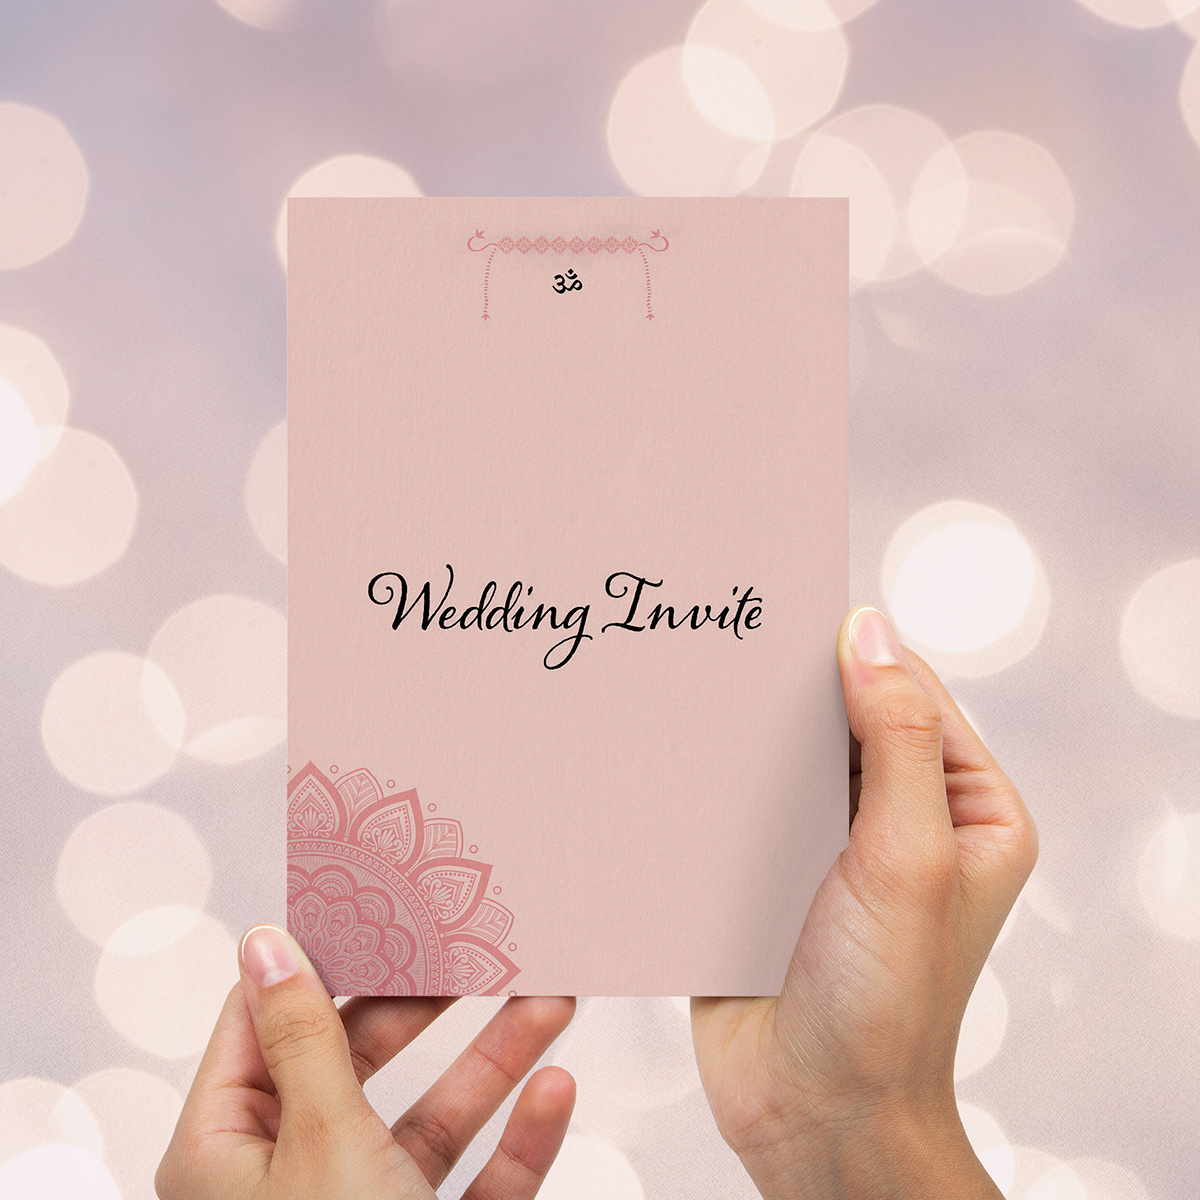 A simple wedding invitation designed for a bride